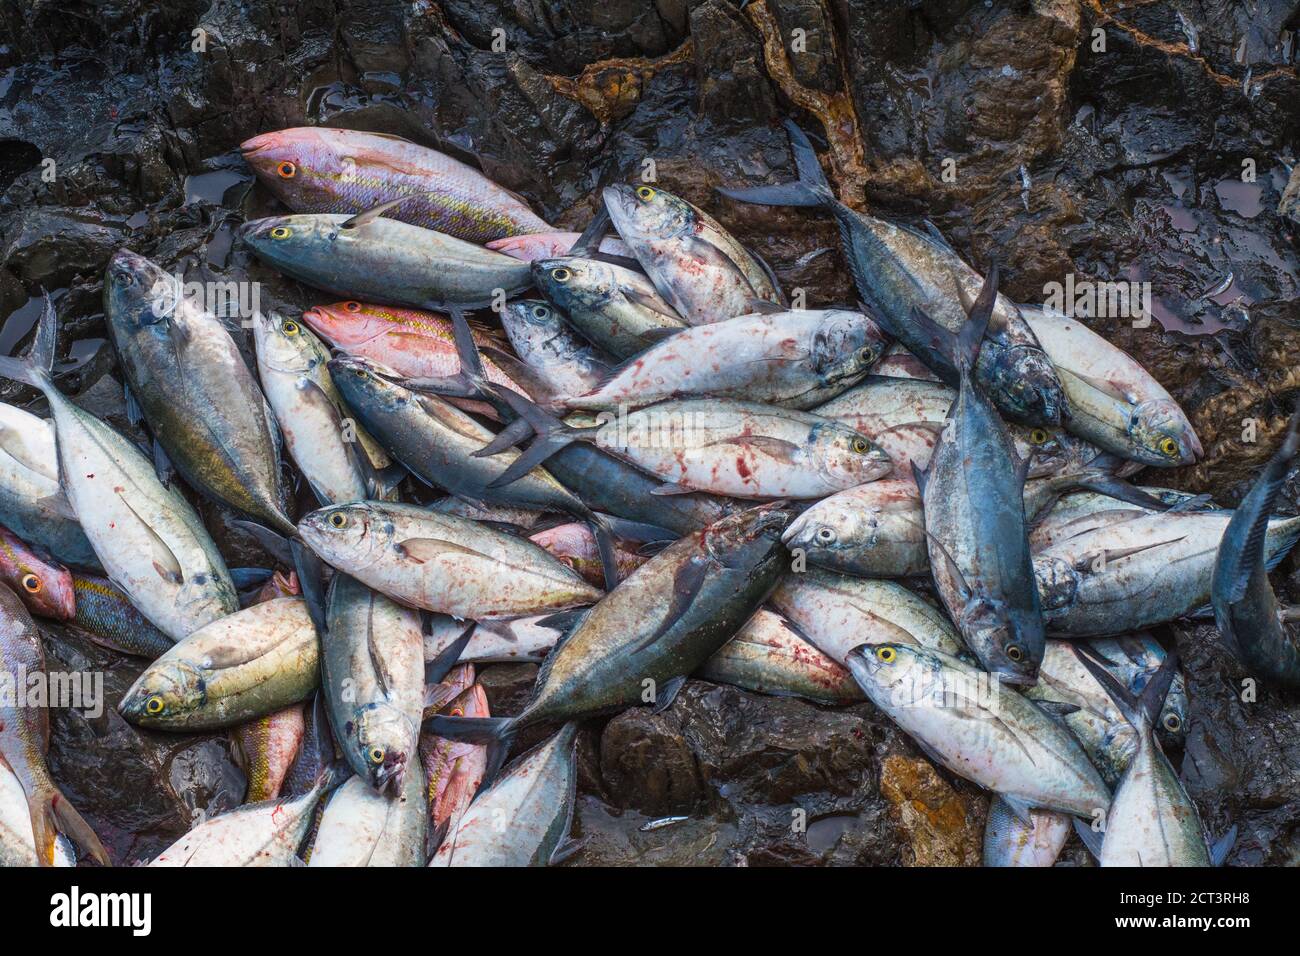 Fishing Industry los roques venezuela Stock Photo